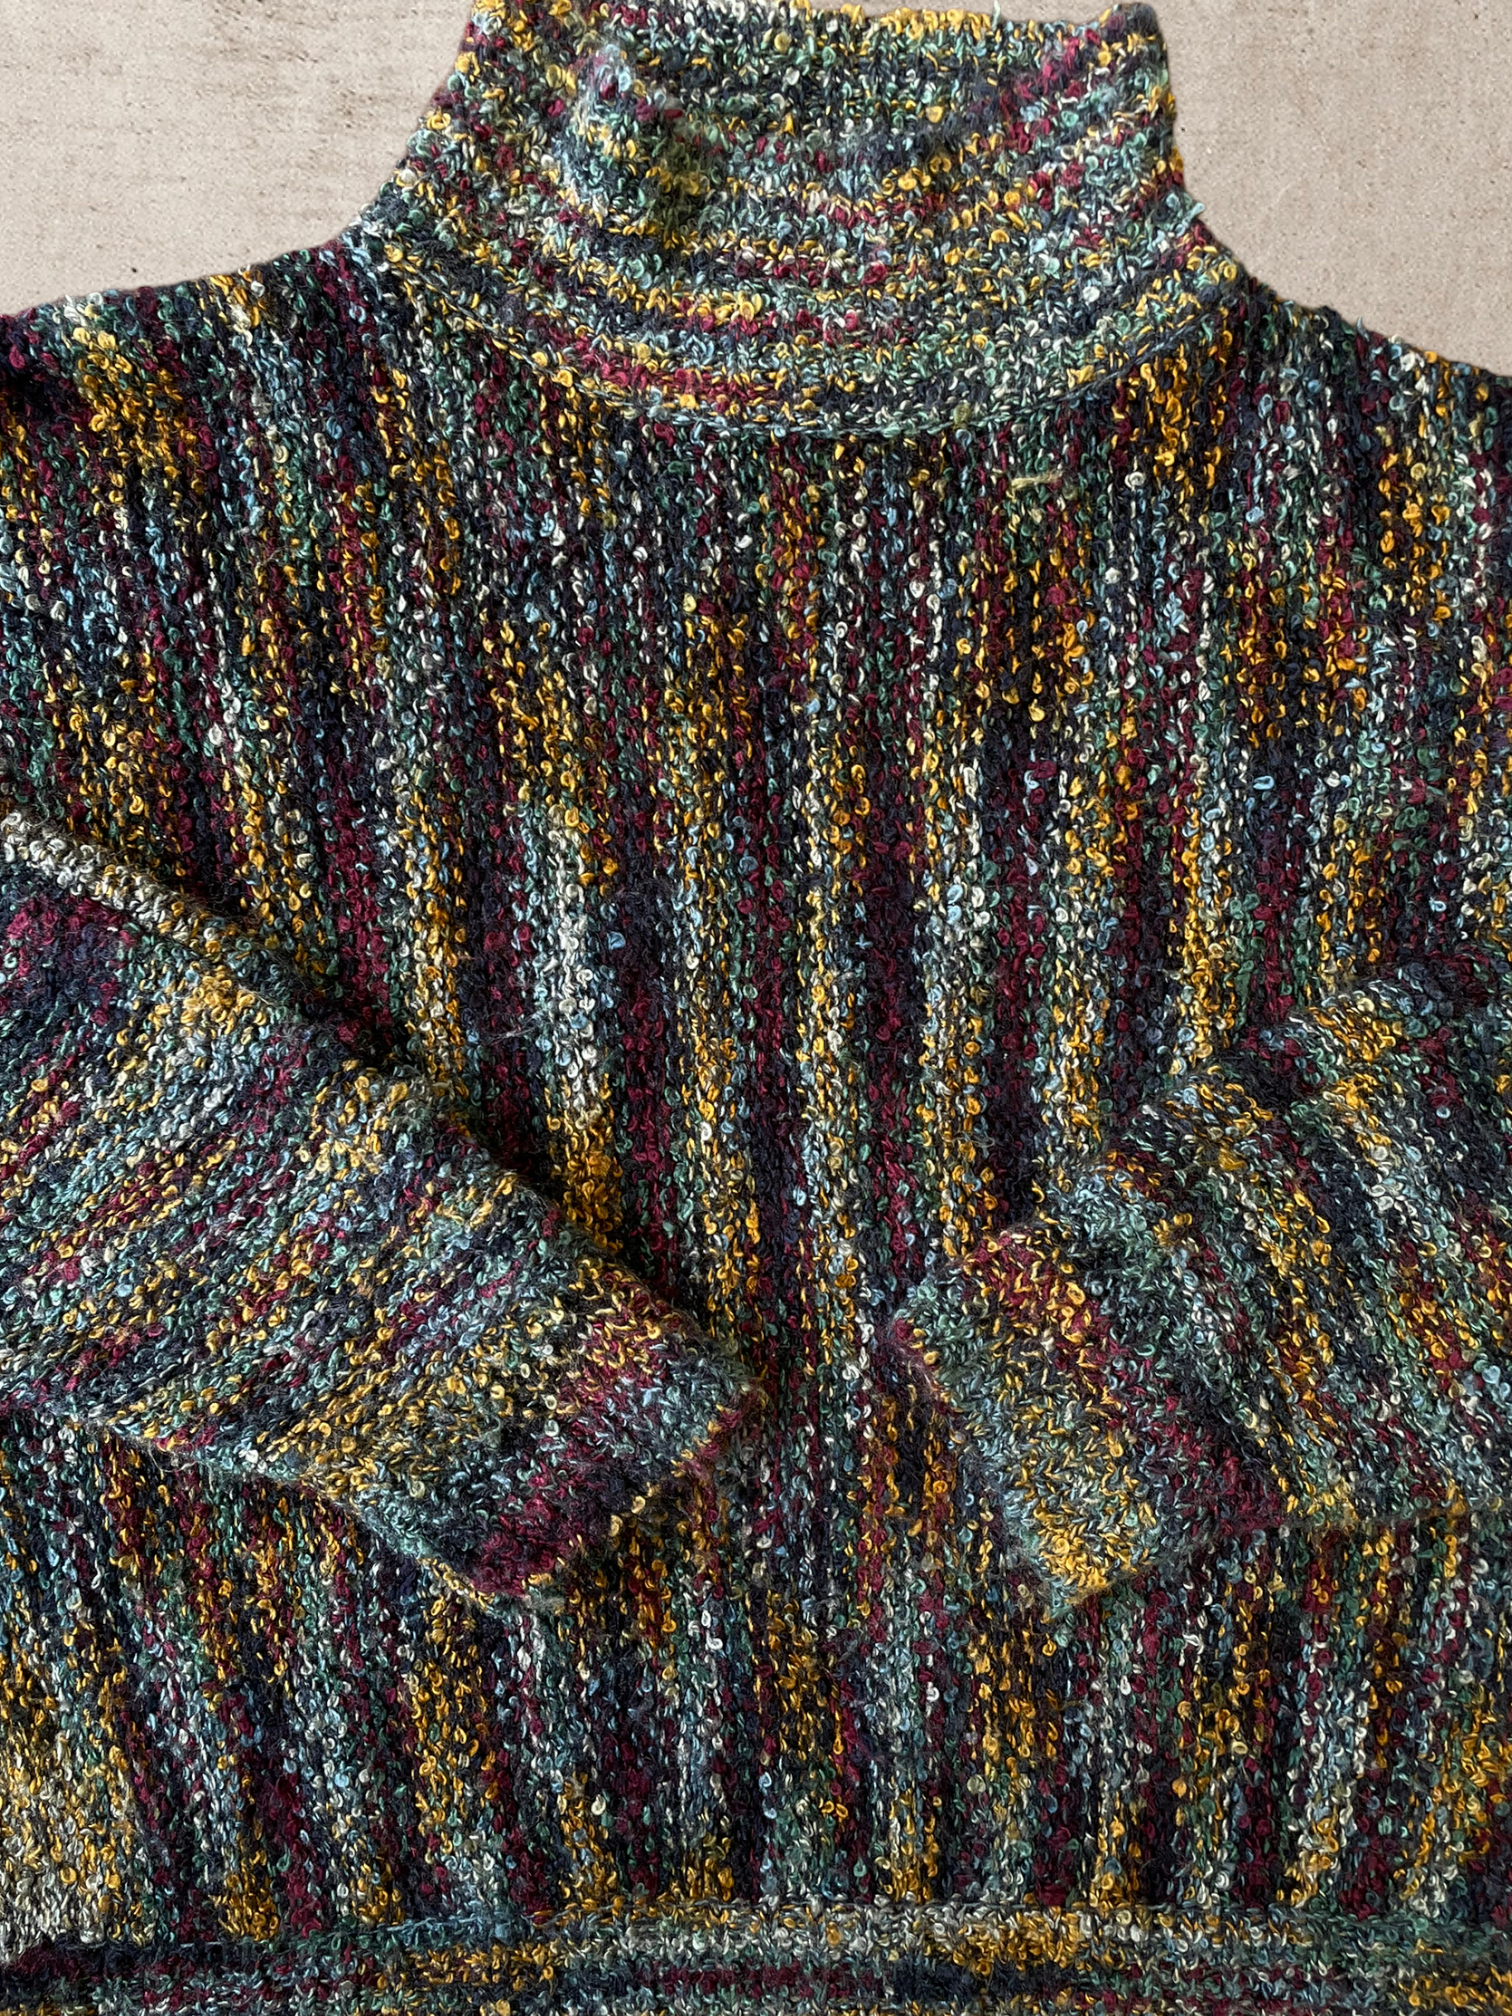 90s Multicolor Knit Mock Neck Sweater - Large